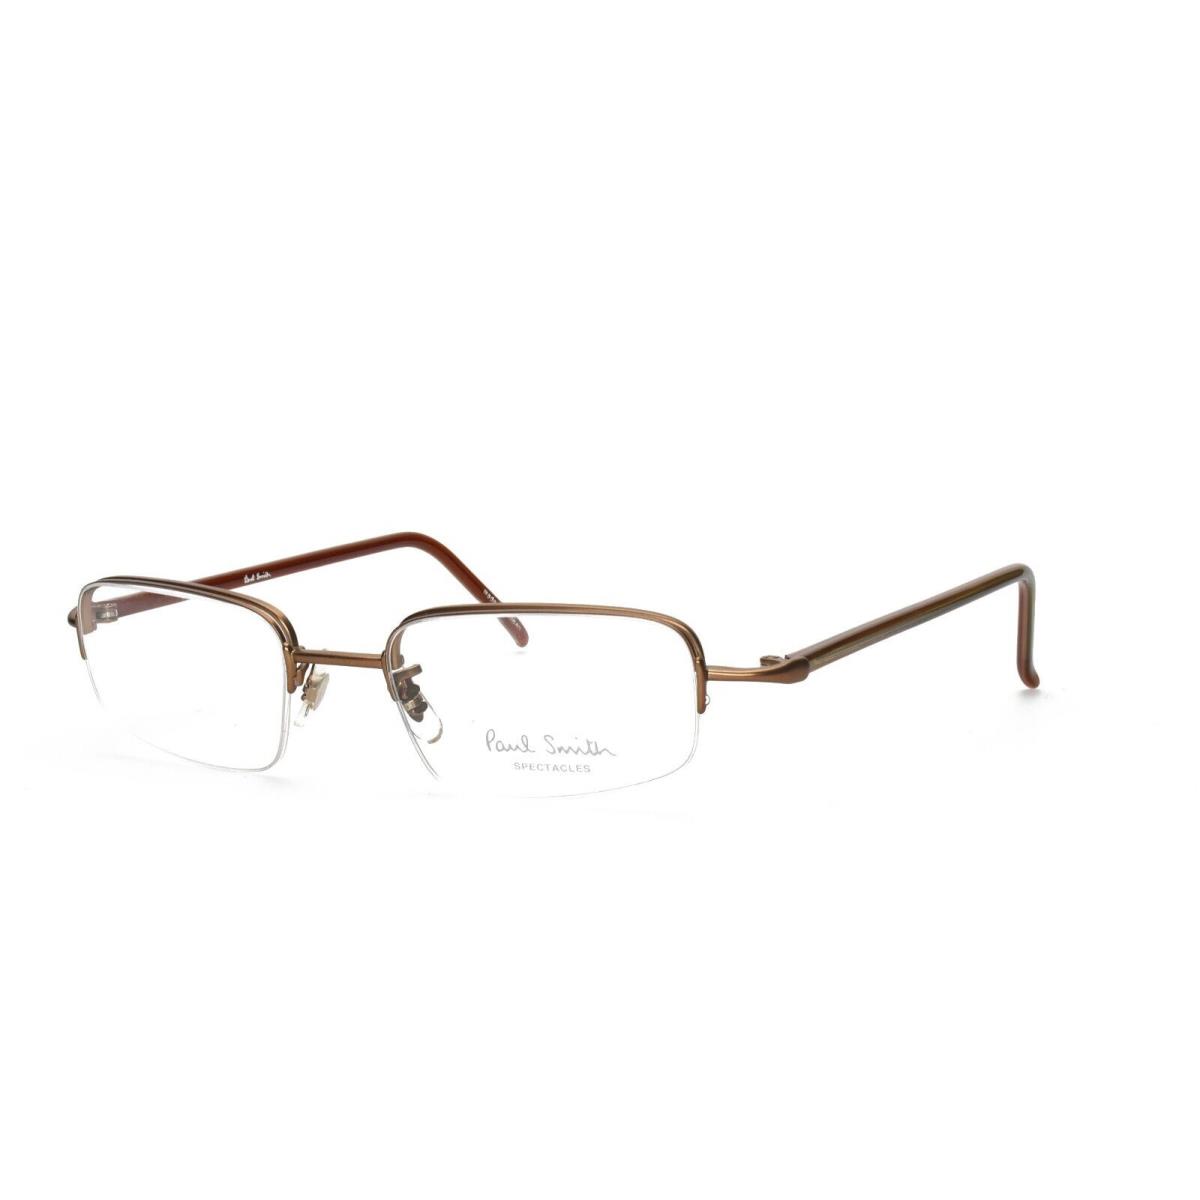 Paul Smith 132 CP 47-19-135 Bronze Vtg Vintage Eyeglasses Frames